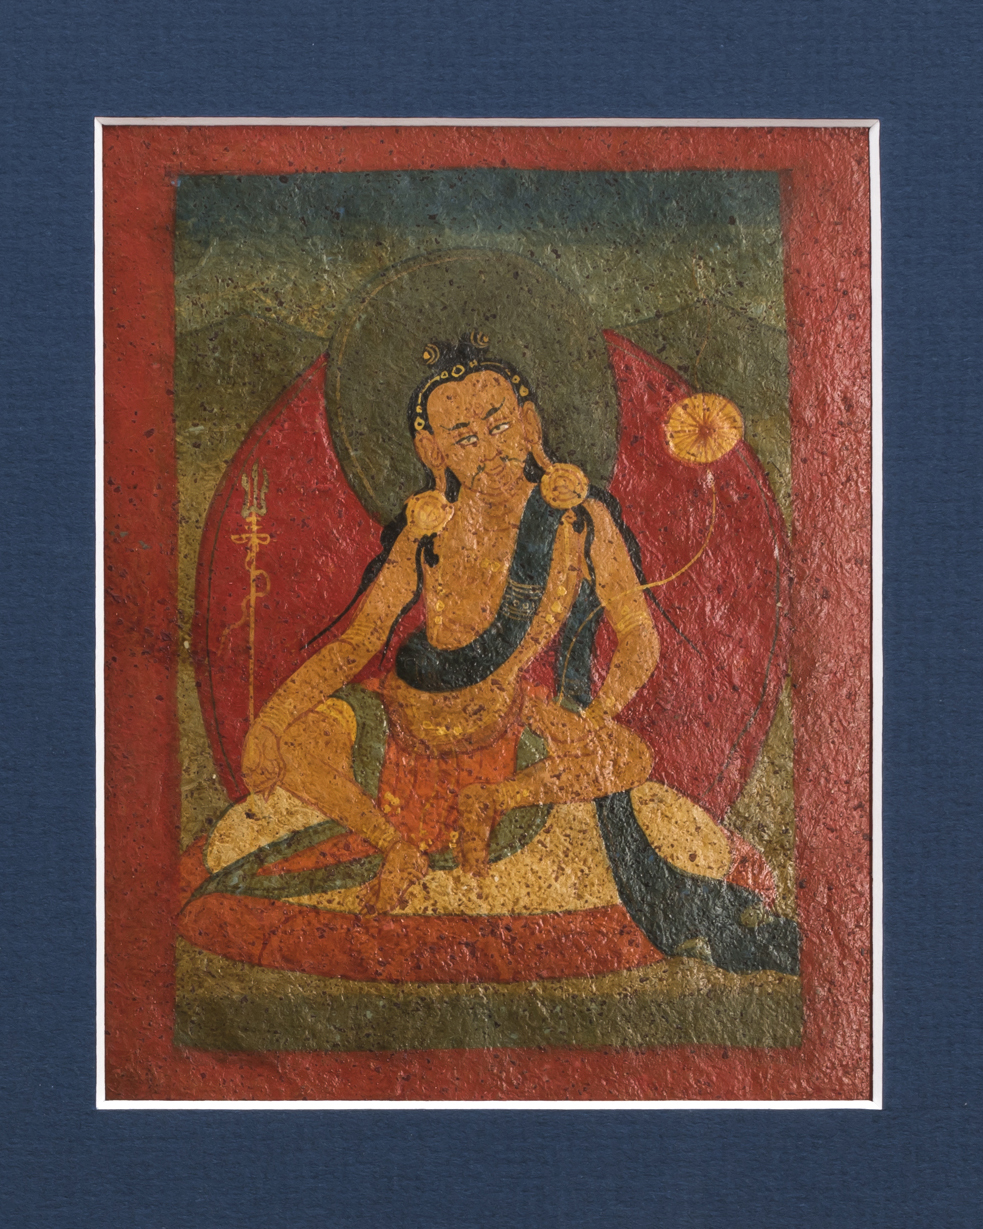 Six Superb Large Size Tibetan Buddhist Tsakli Paintings from the 18th Century